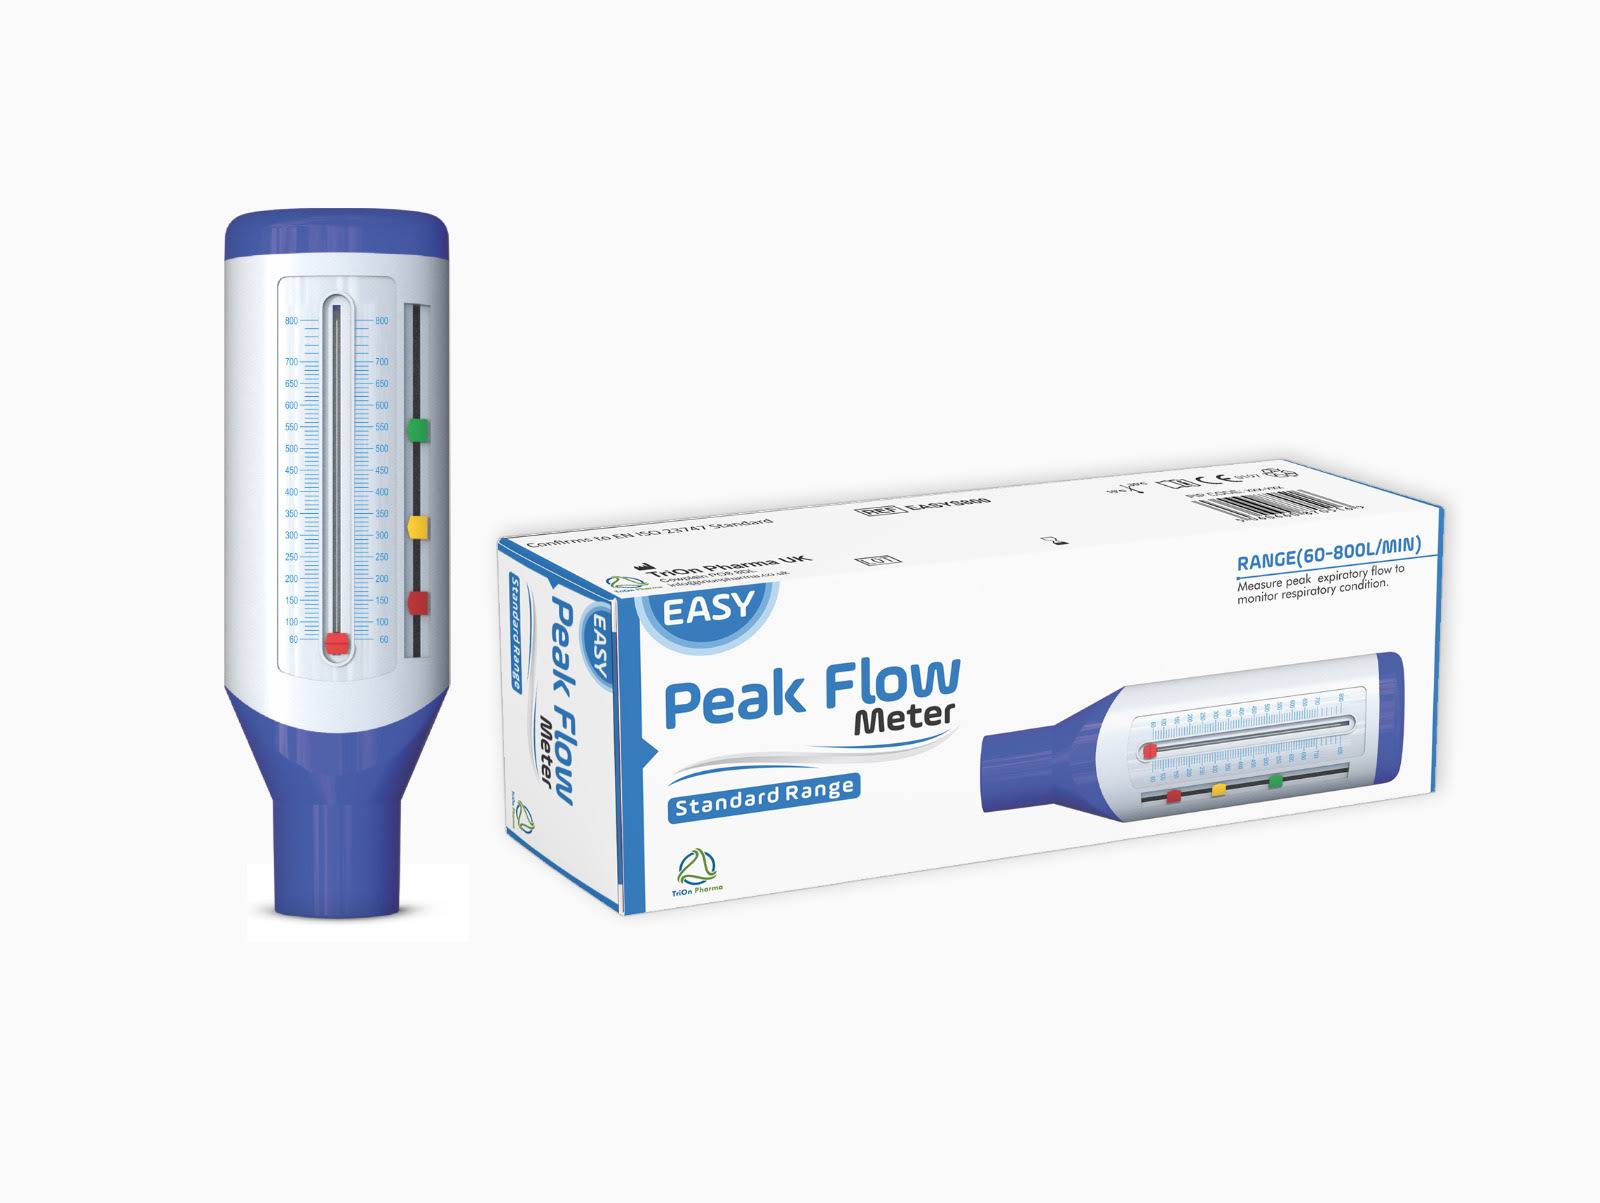 Easy Peak Flow Meter for monitoring Lung Function Standard Range for Adult